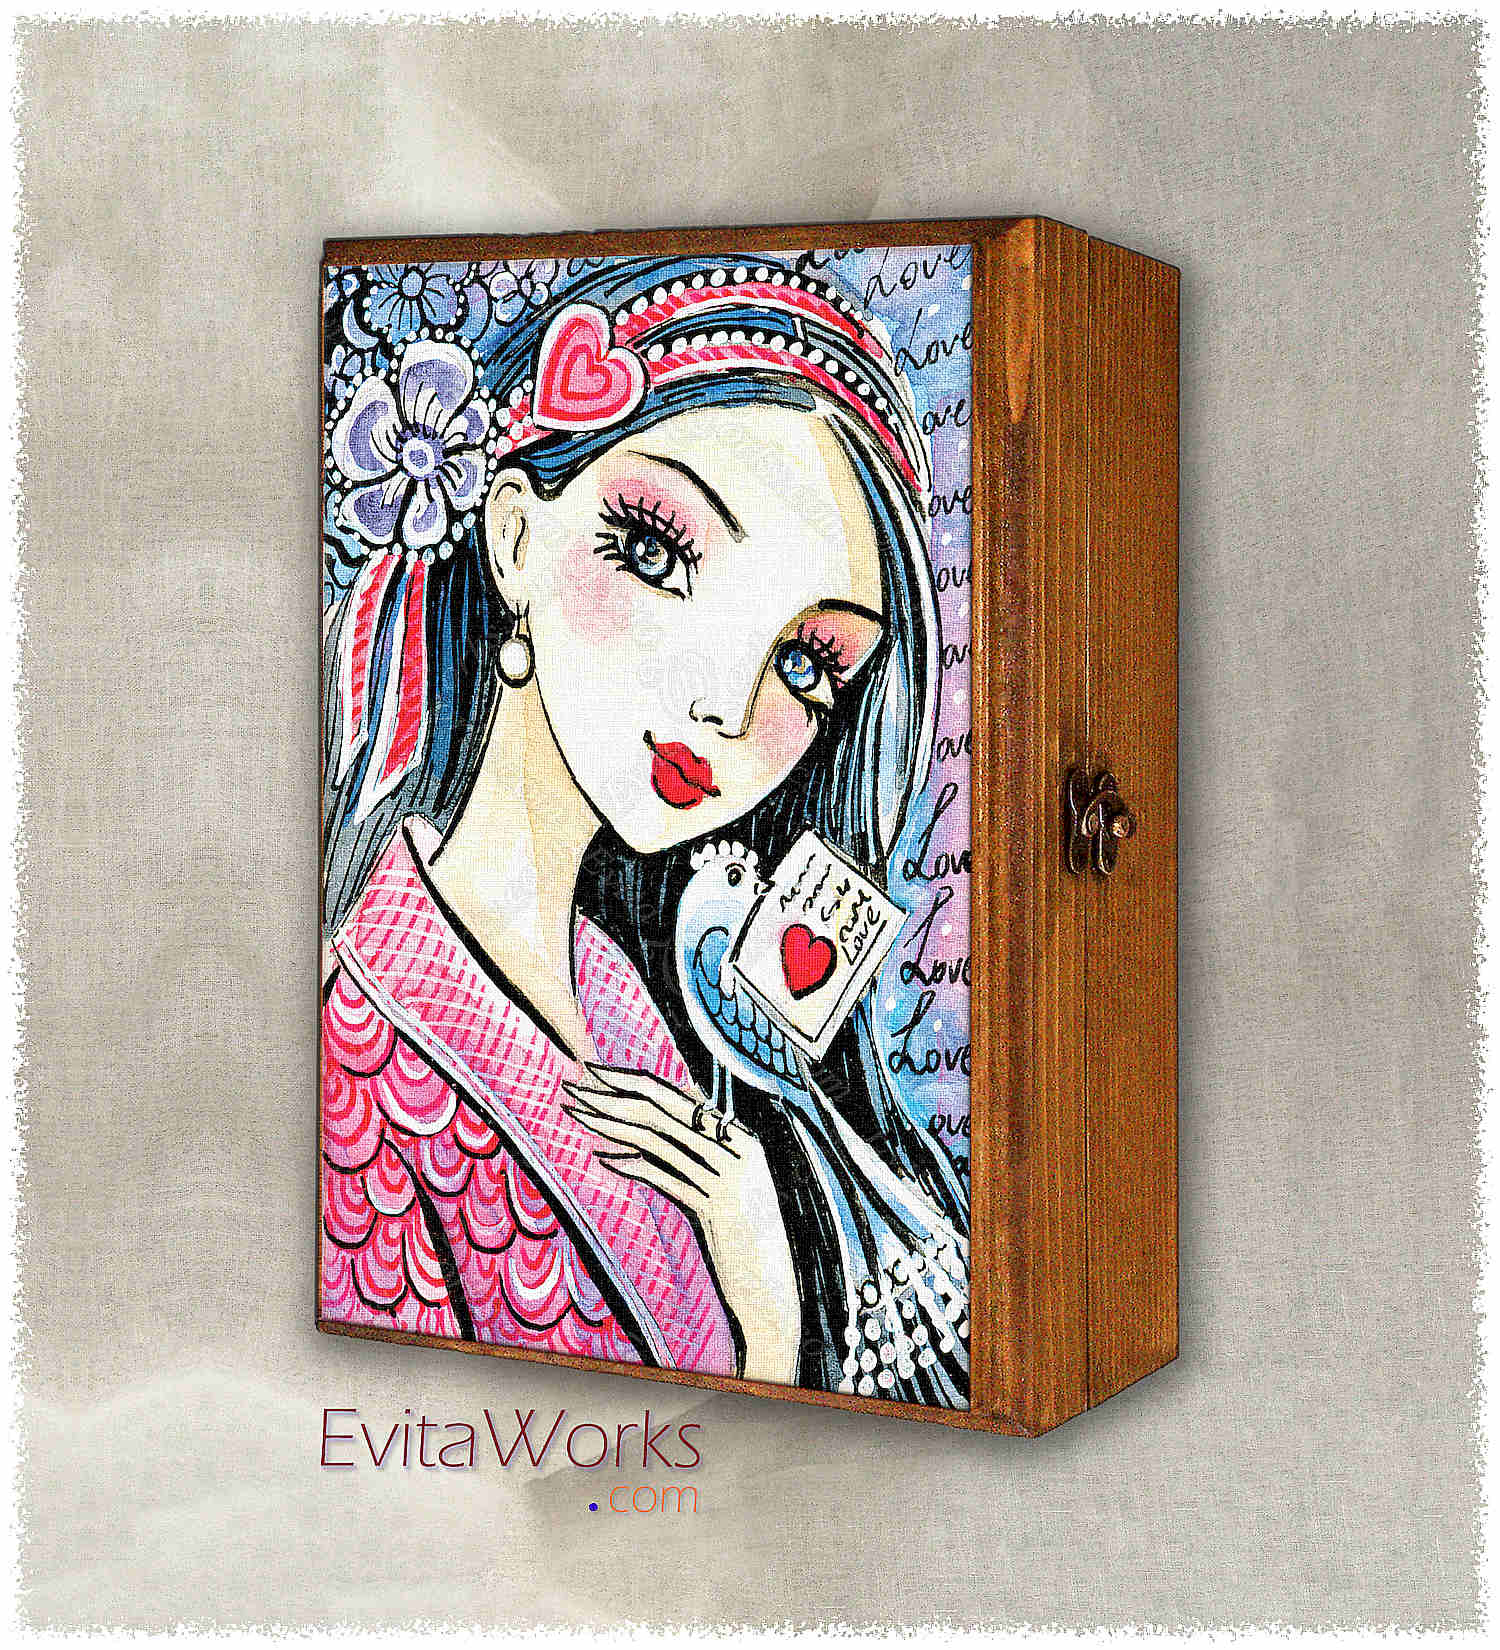 ao geisha 79 bxl ~ EvitaWorks